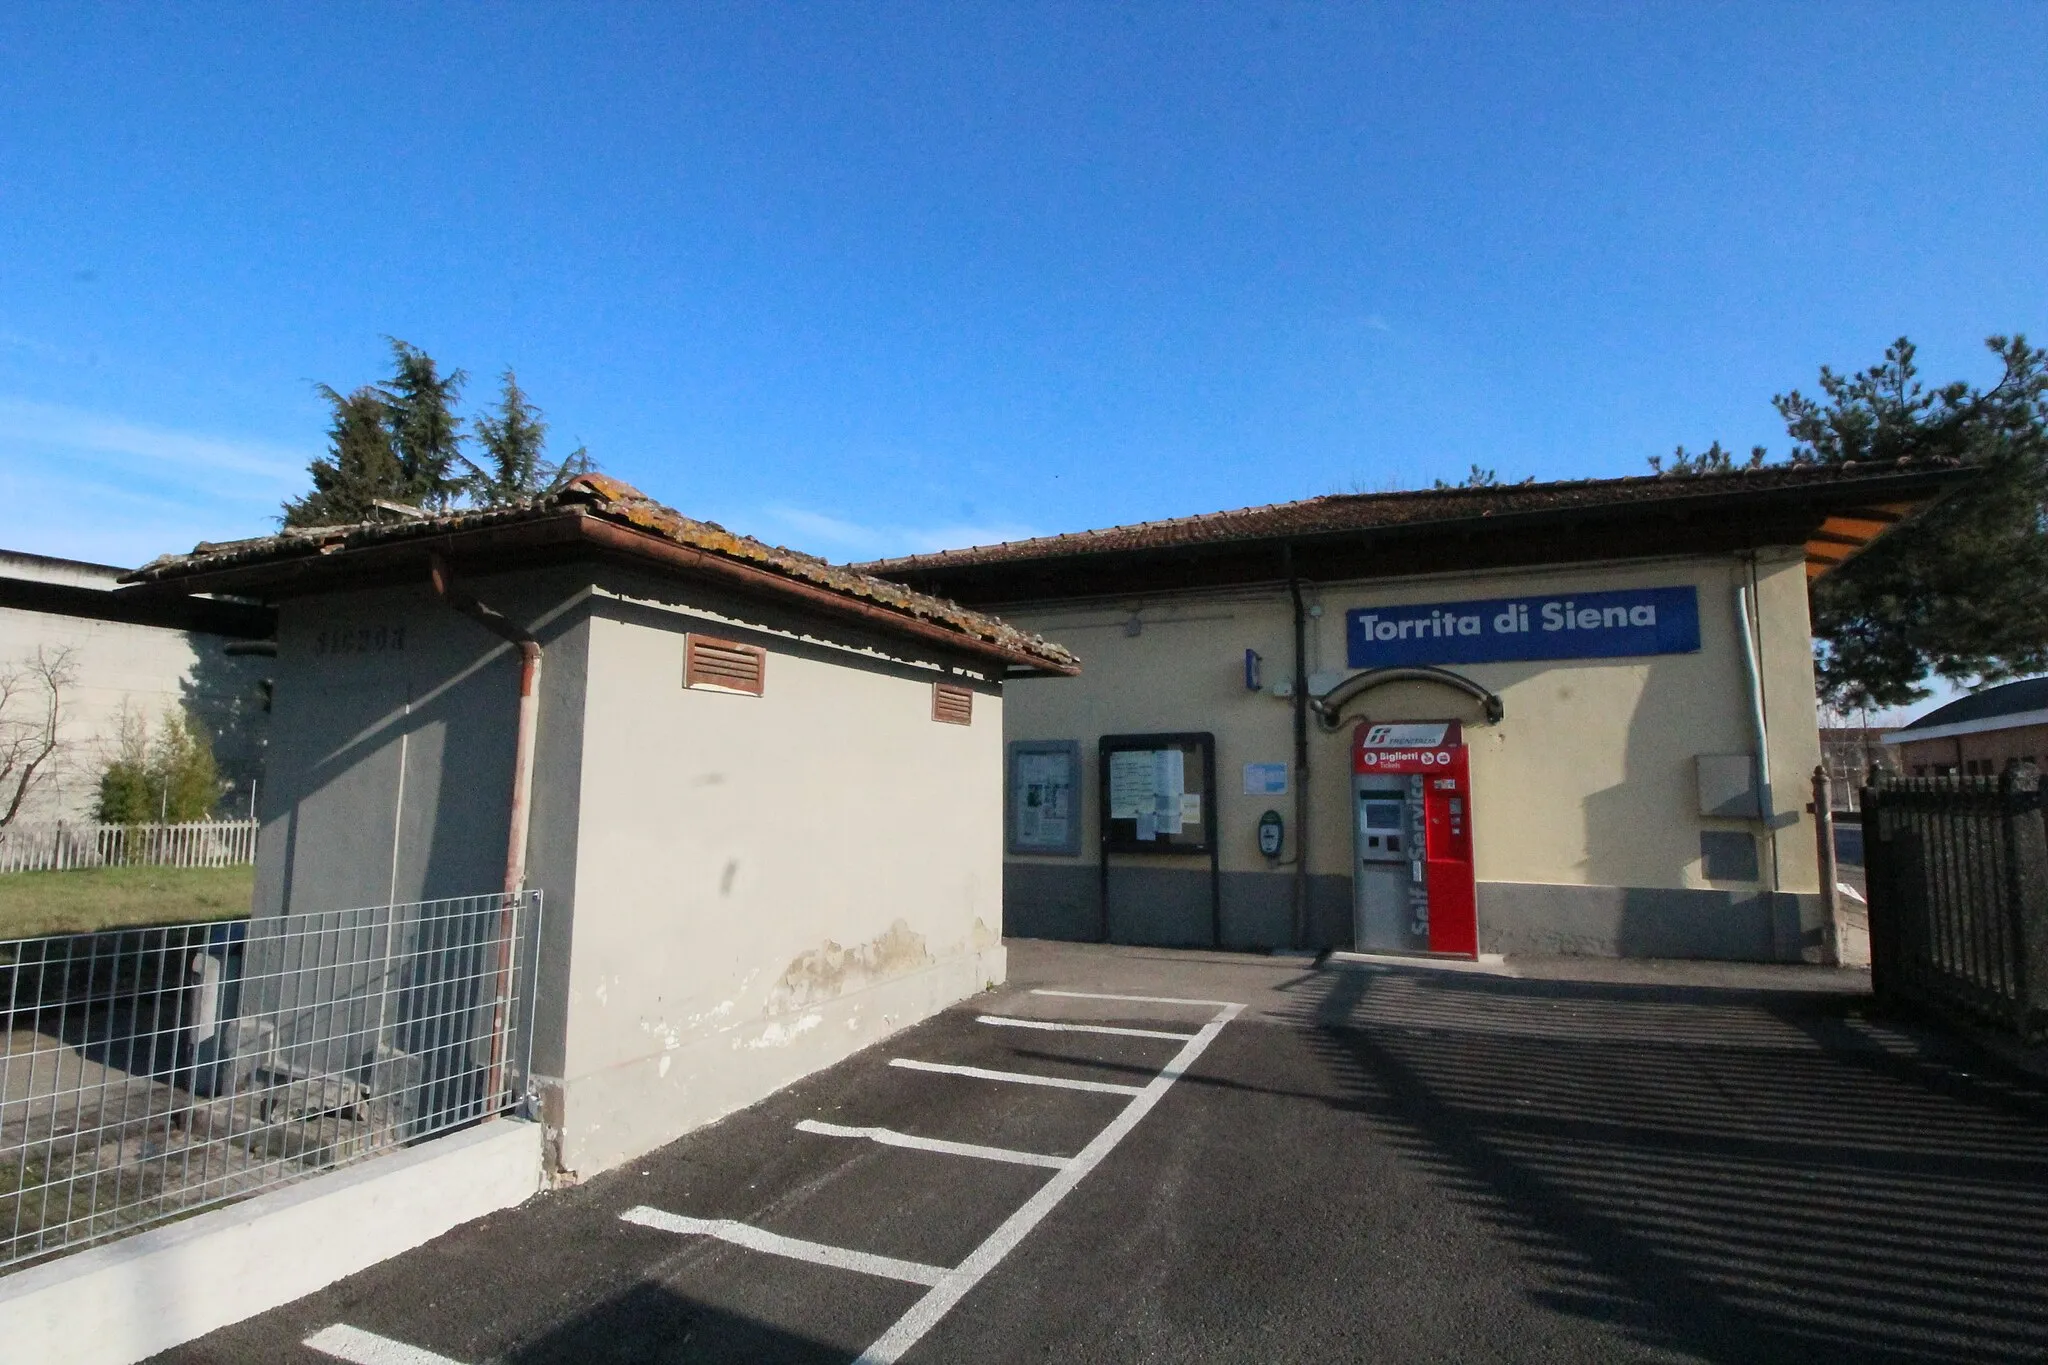 Photo showing: Train station Torrita di Siena in Torrita di Siena, Val di Chiano, Province of Siena, Tuscany, Italy